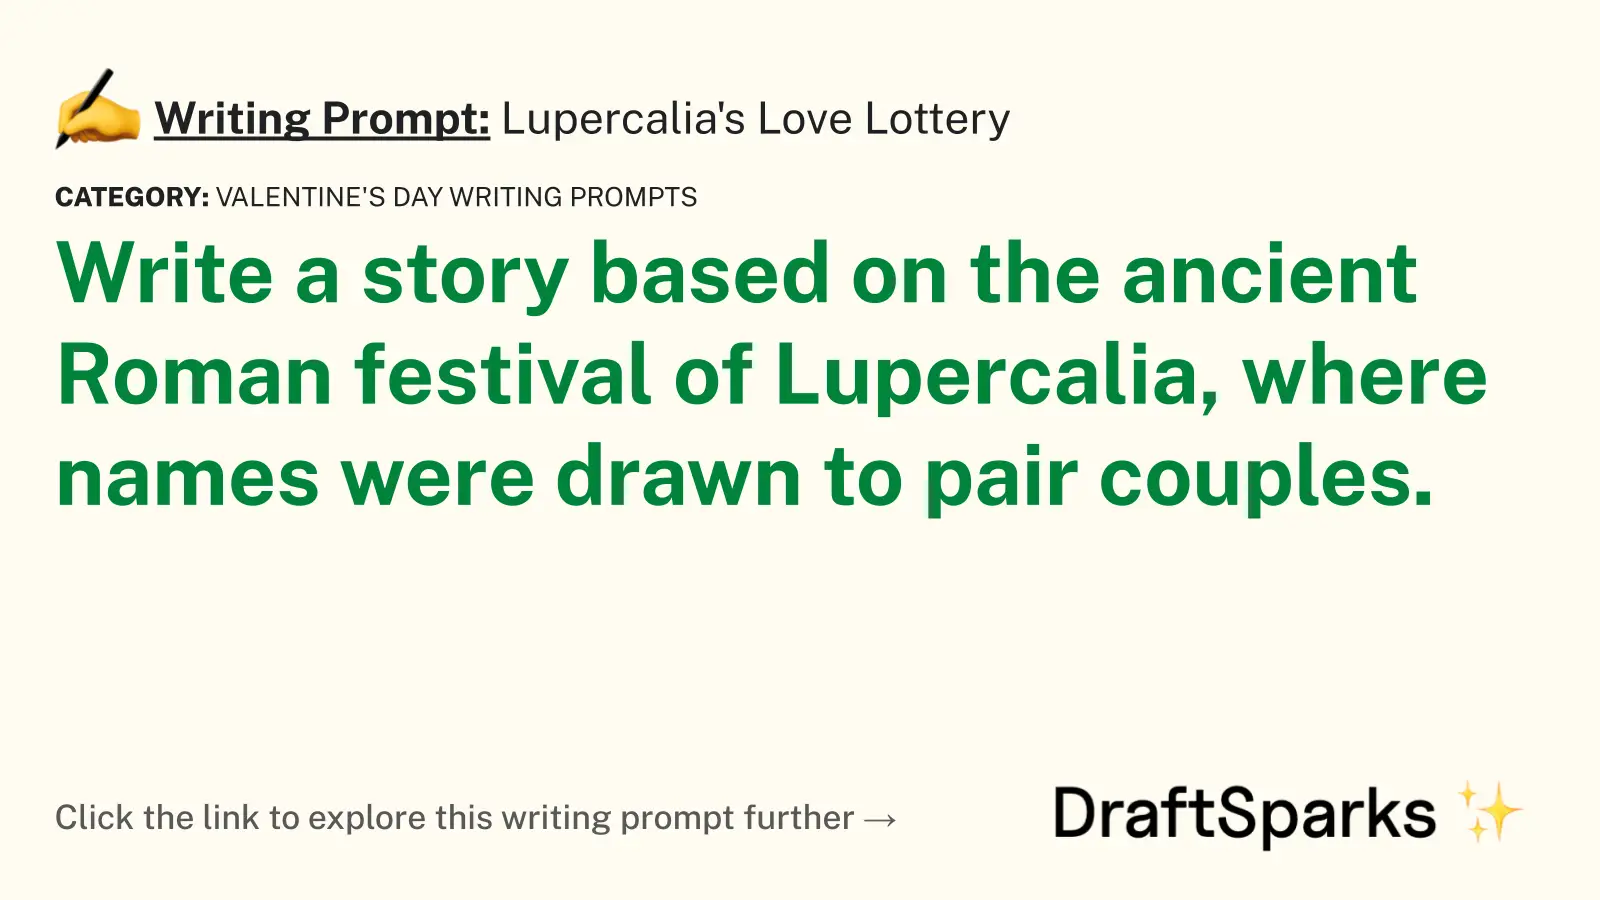 Lupercalia’s Love Lottery